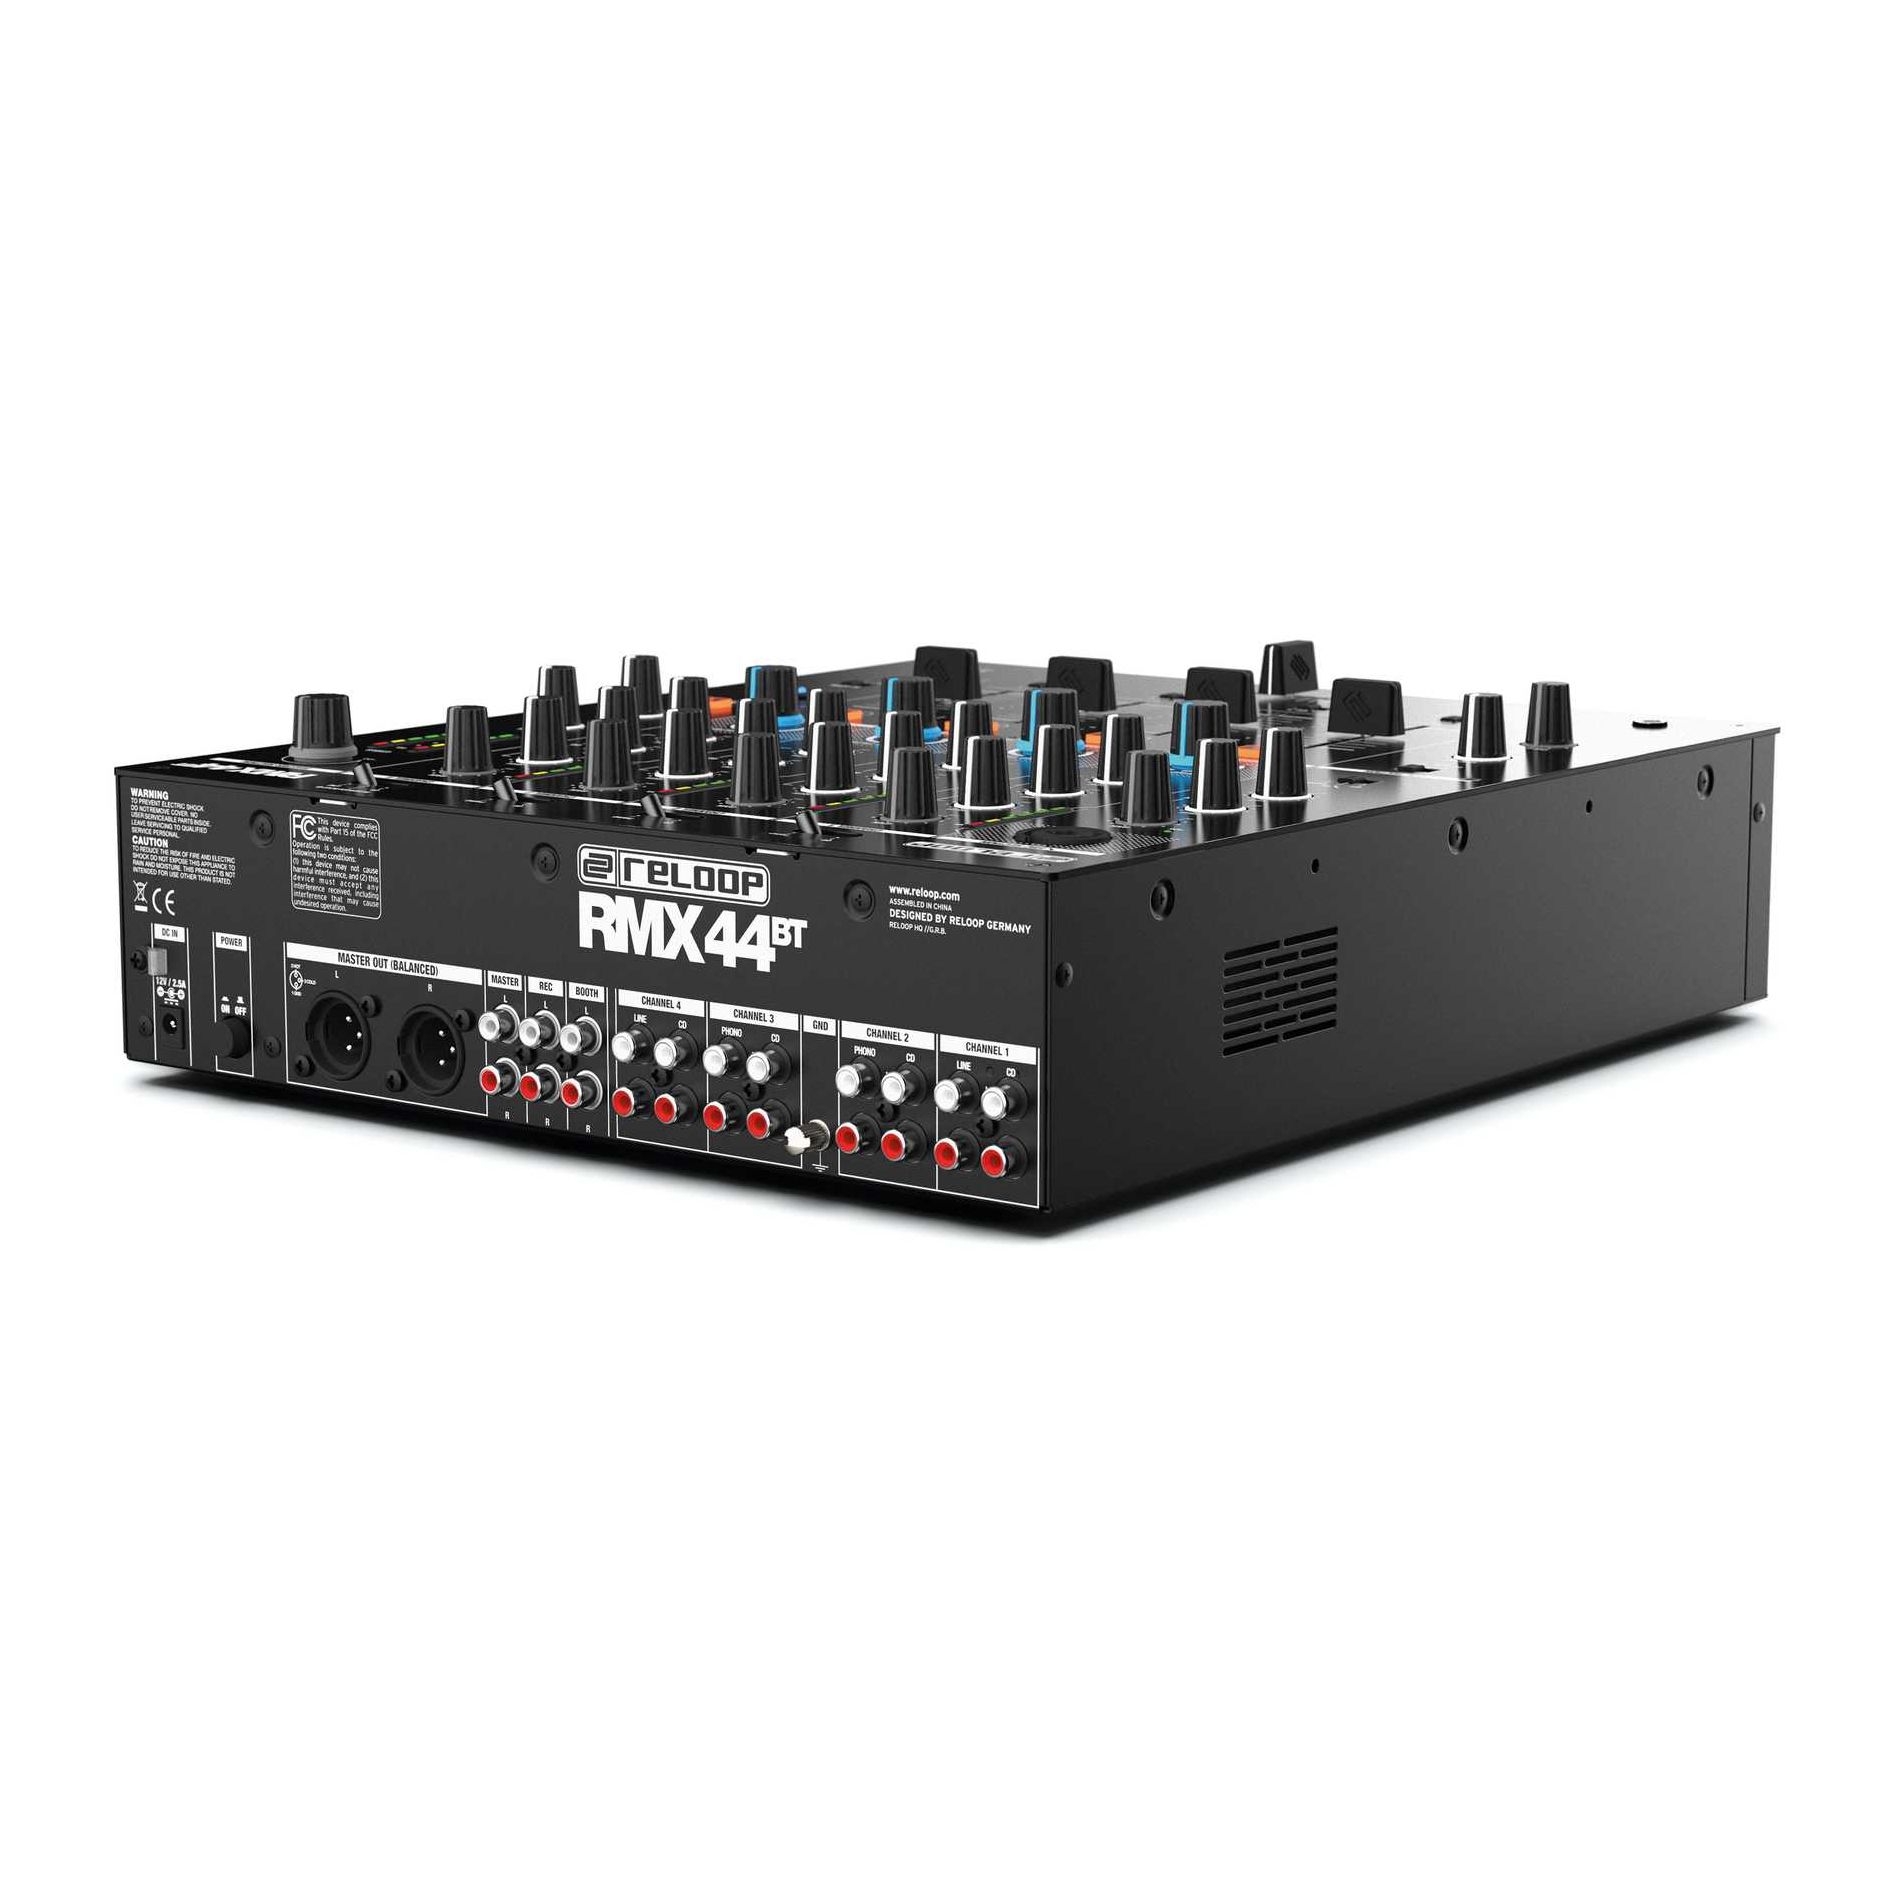 Reloop Rmx-44 Bt - DJ mixer - Variation 2